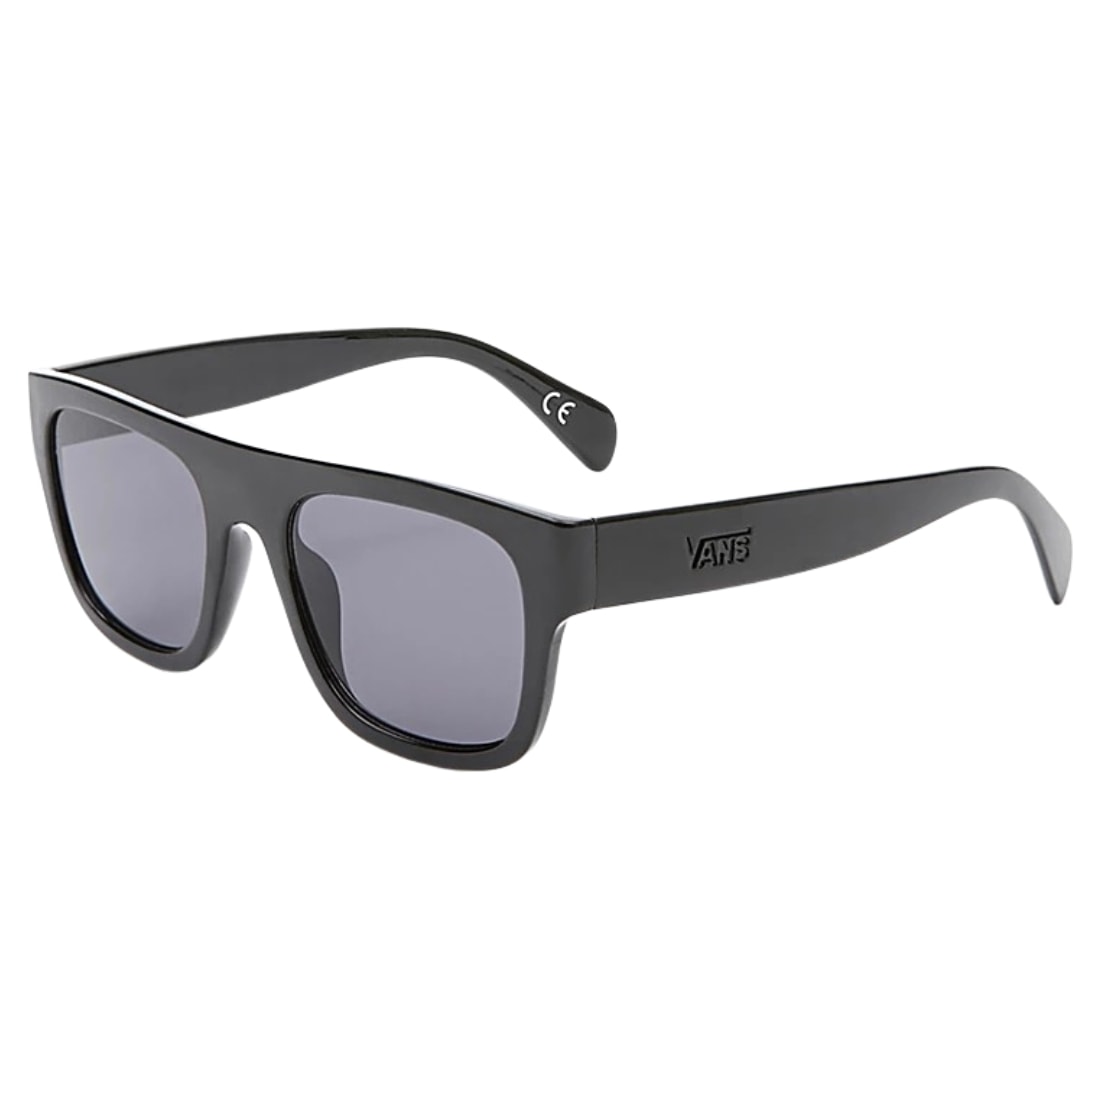 Vans Squared Off Shades Sunglasses - Black - Square/Rectangular Sunglasses by Vans